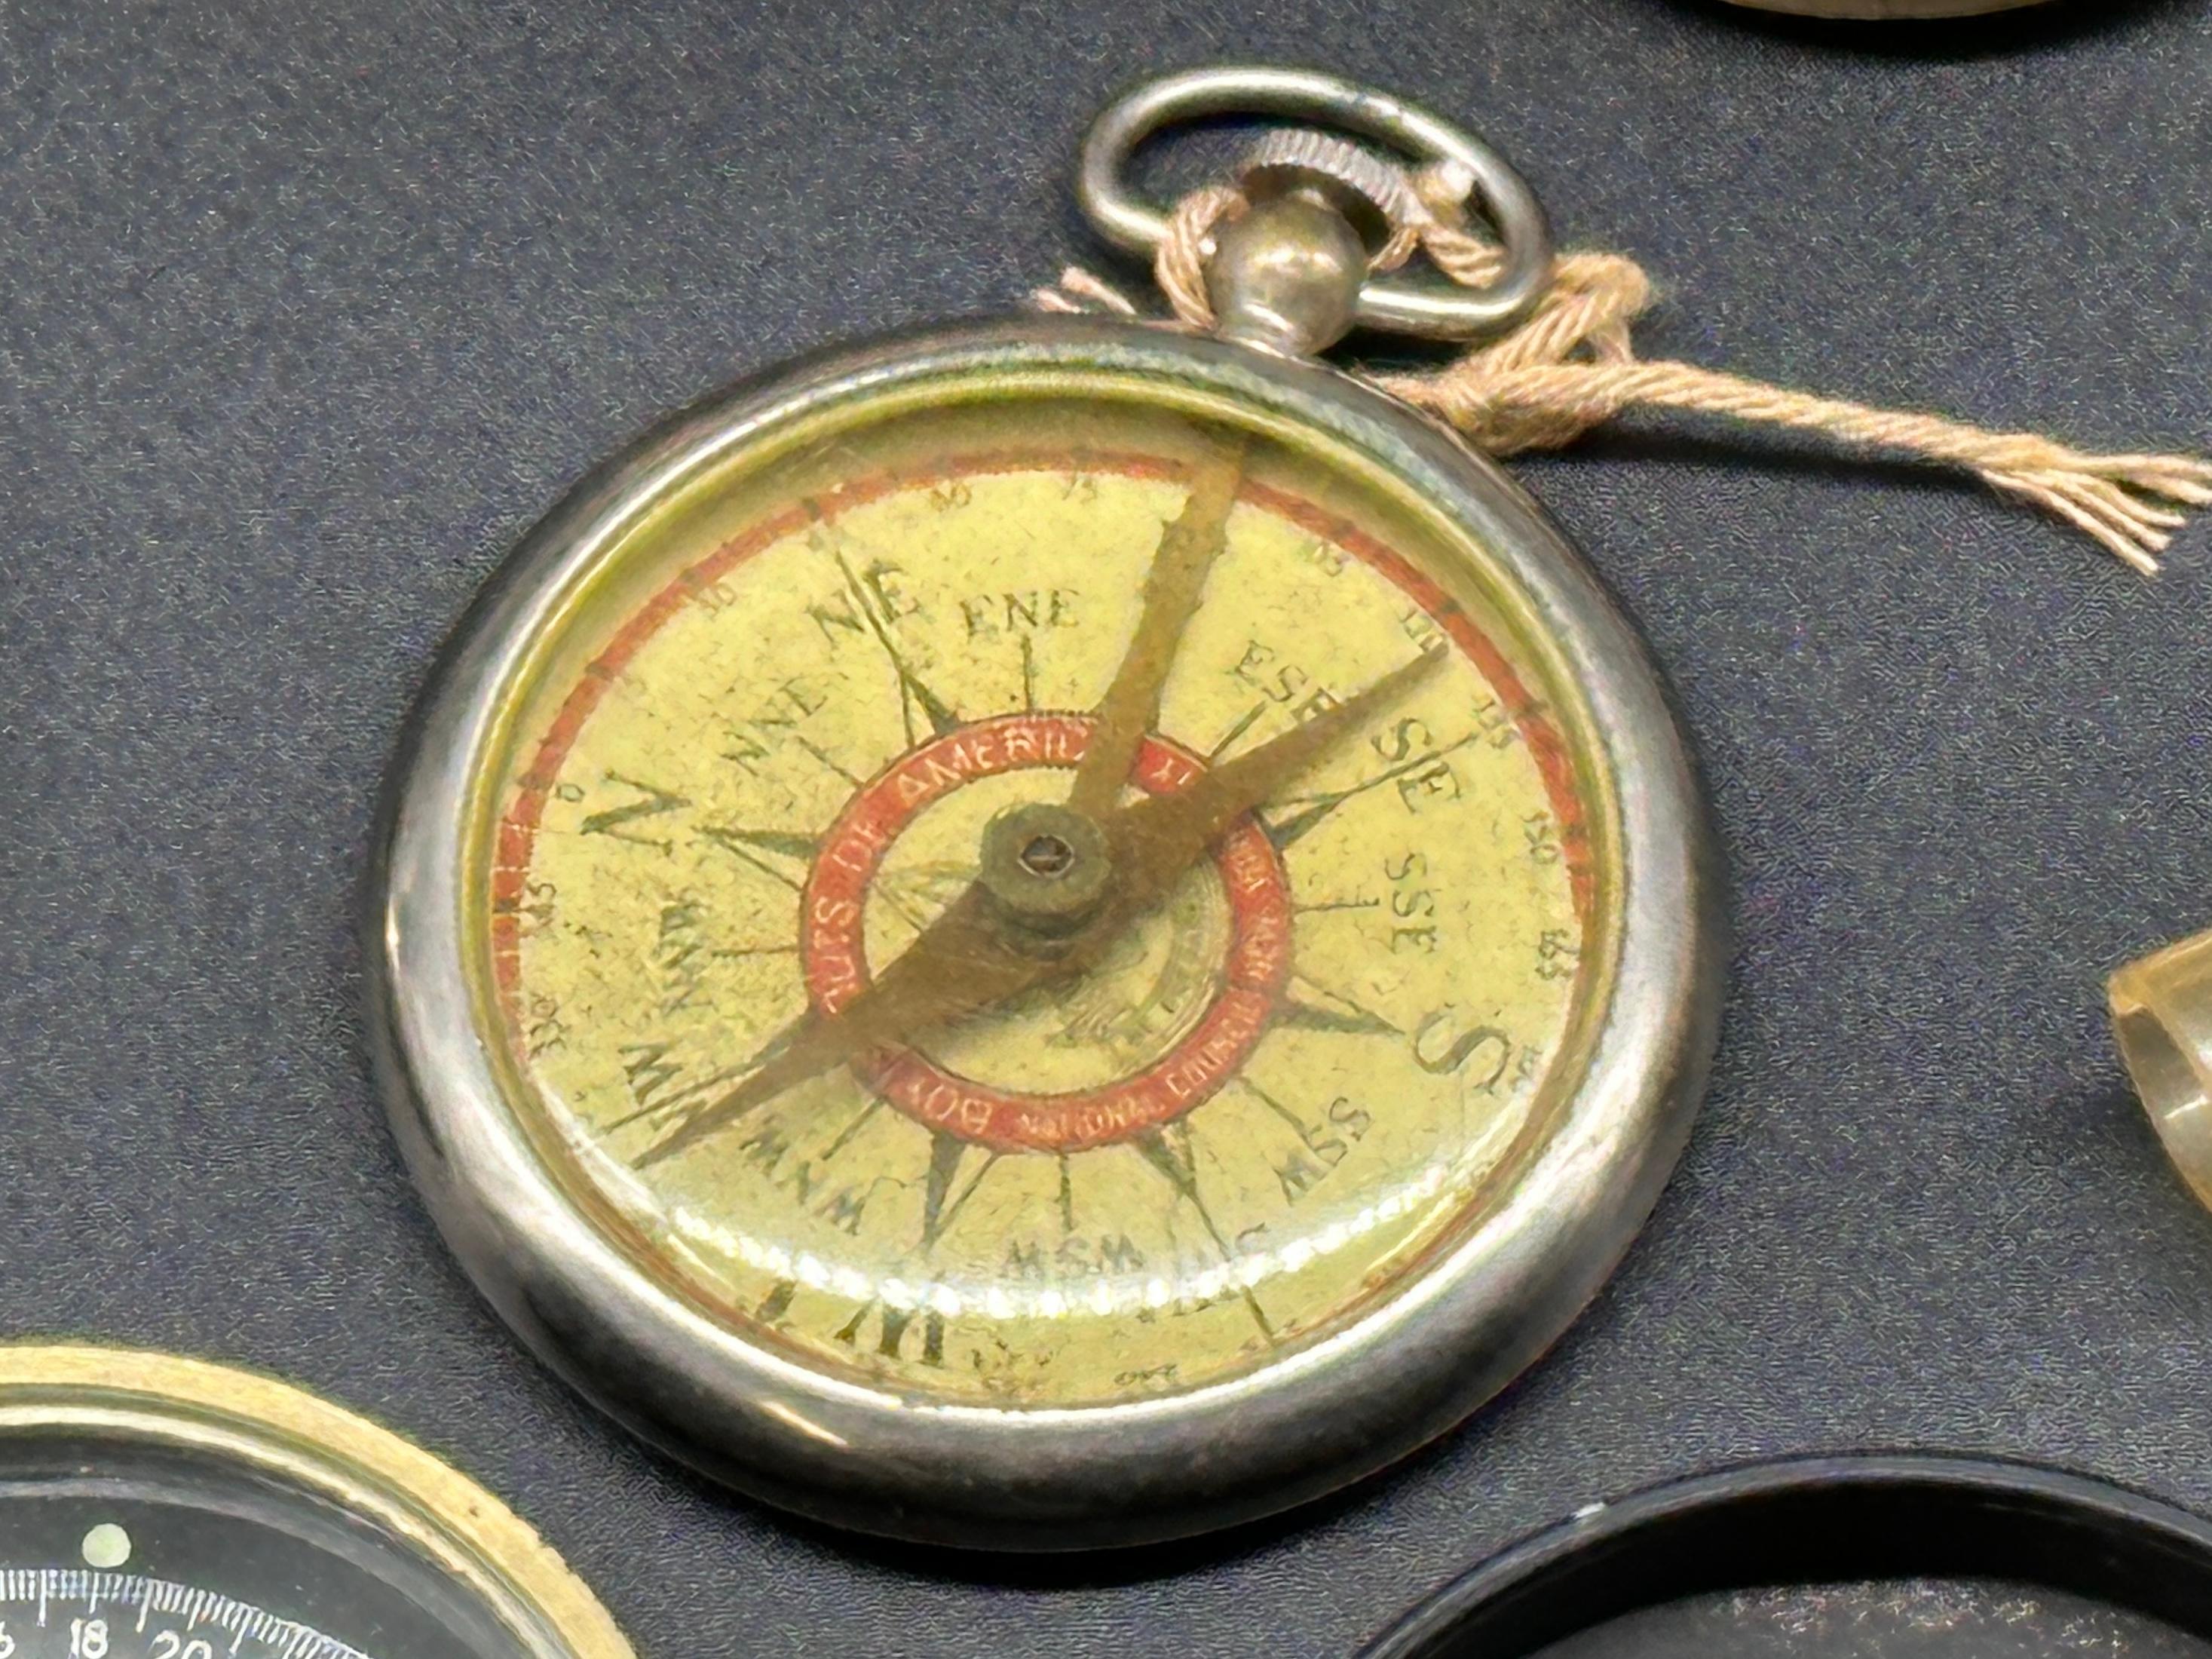 Misc. Compasses